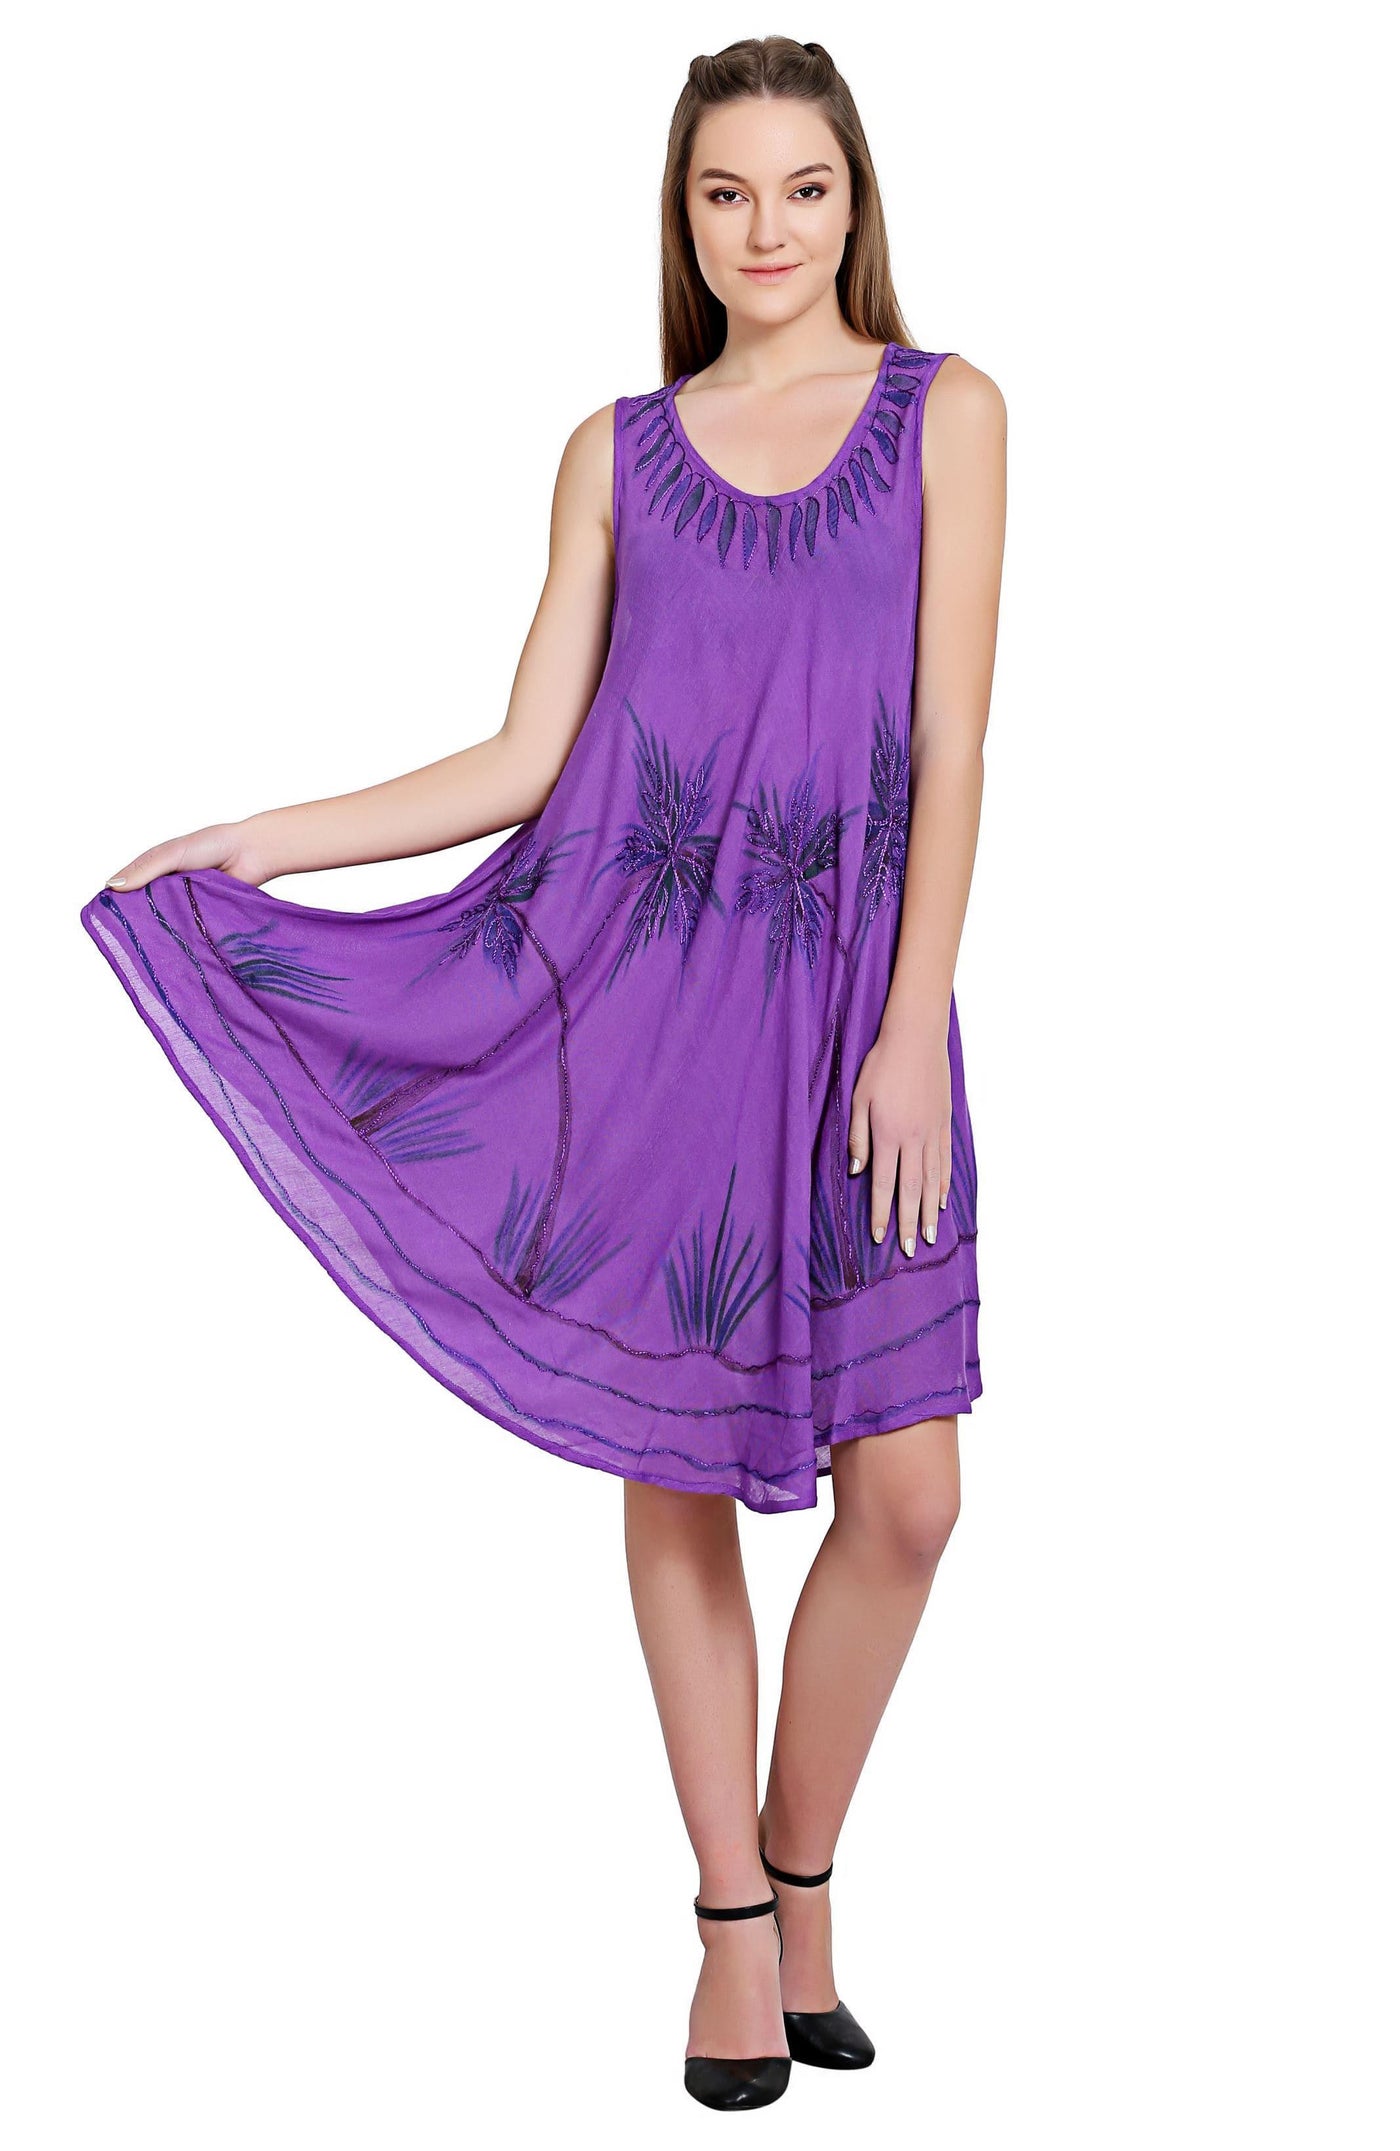 Tropical Palm Tree Tie Dye Umbrella Dress 19328  - Advance Apparels Inc